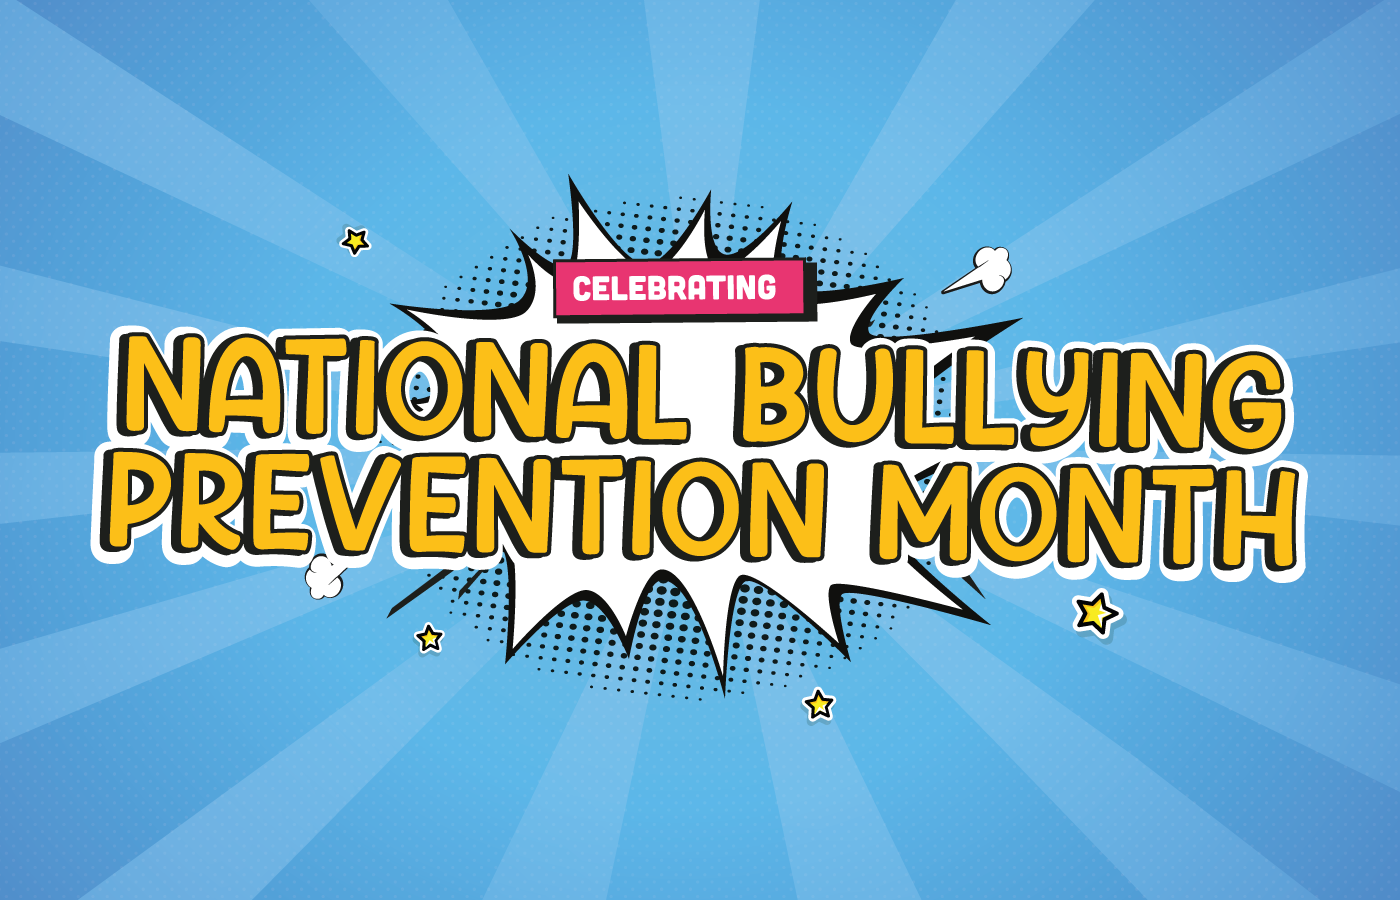 National Bullying Prevention Awareness Month